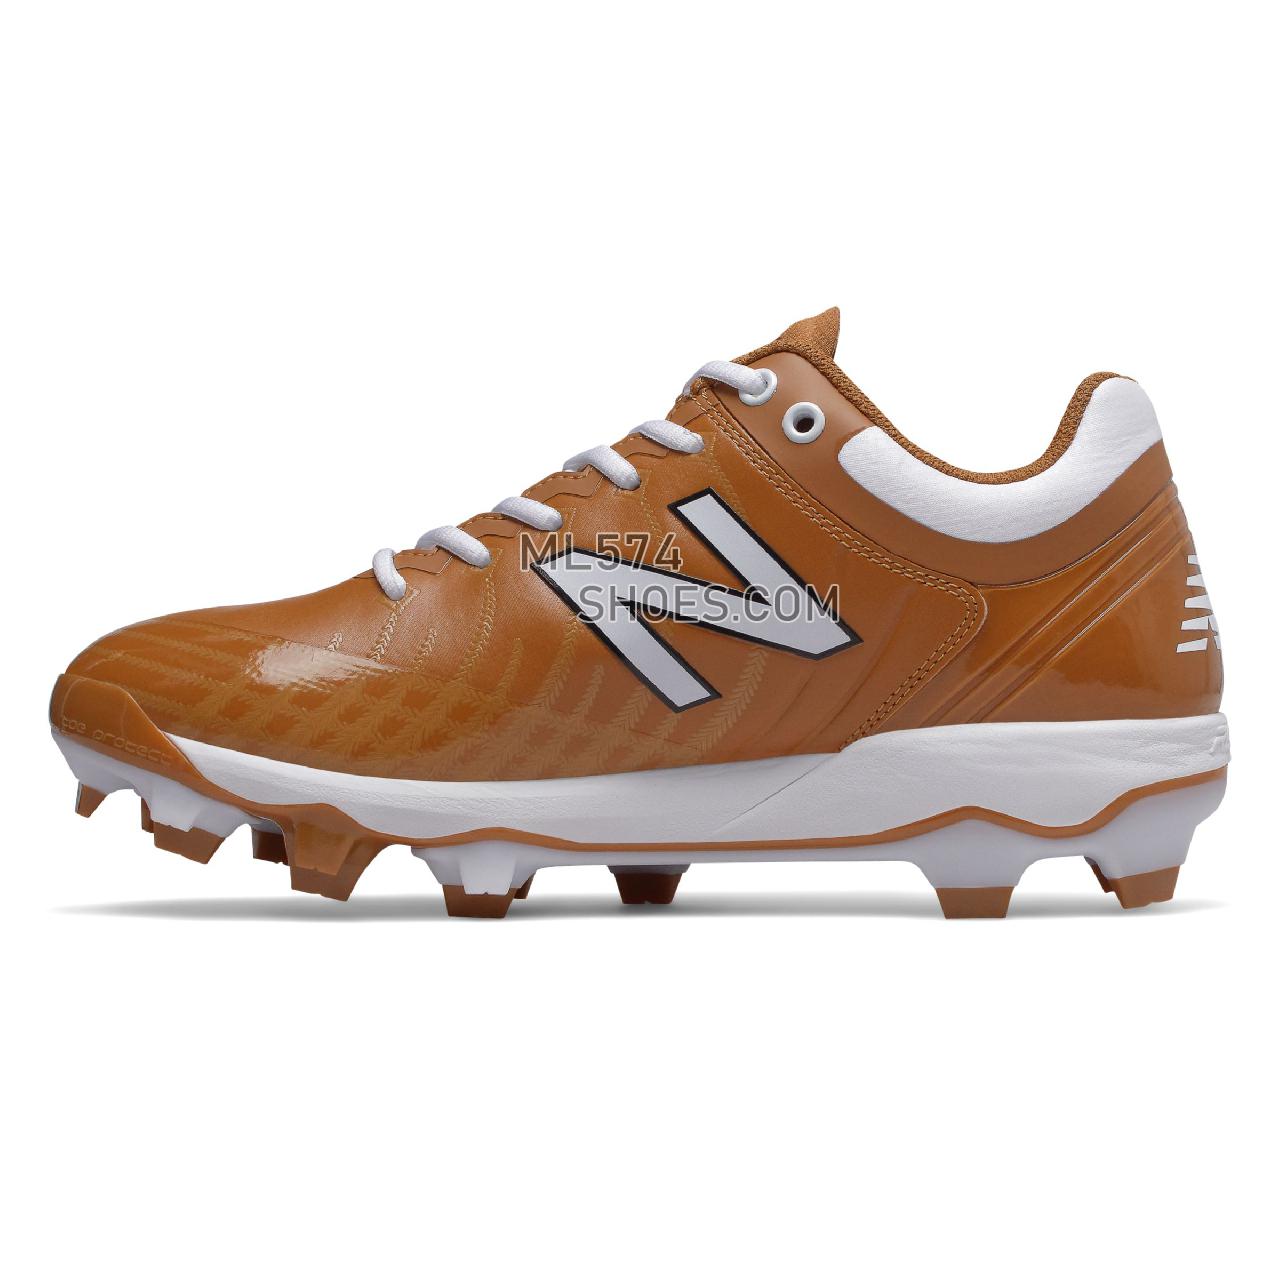 New Balance 4040v5 TPU - Men's Baseball Turf - Burnt Orange with White - PL4040L5